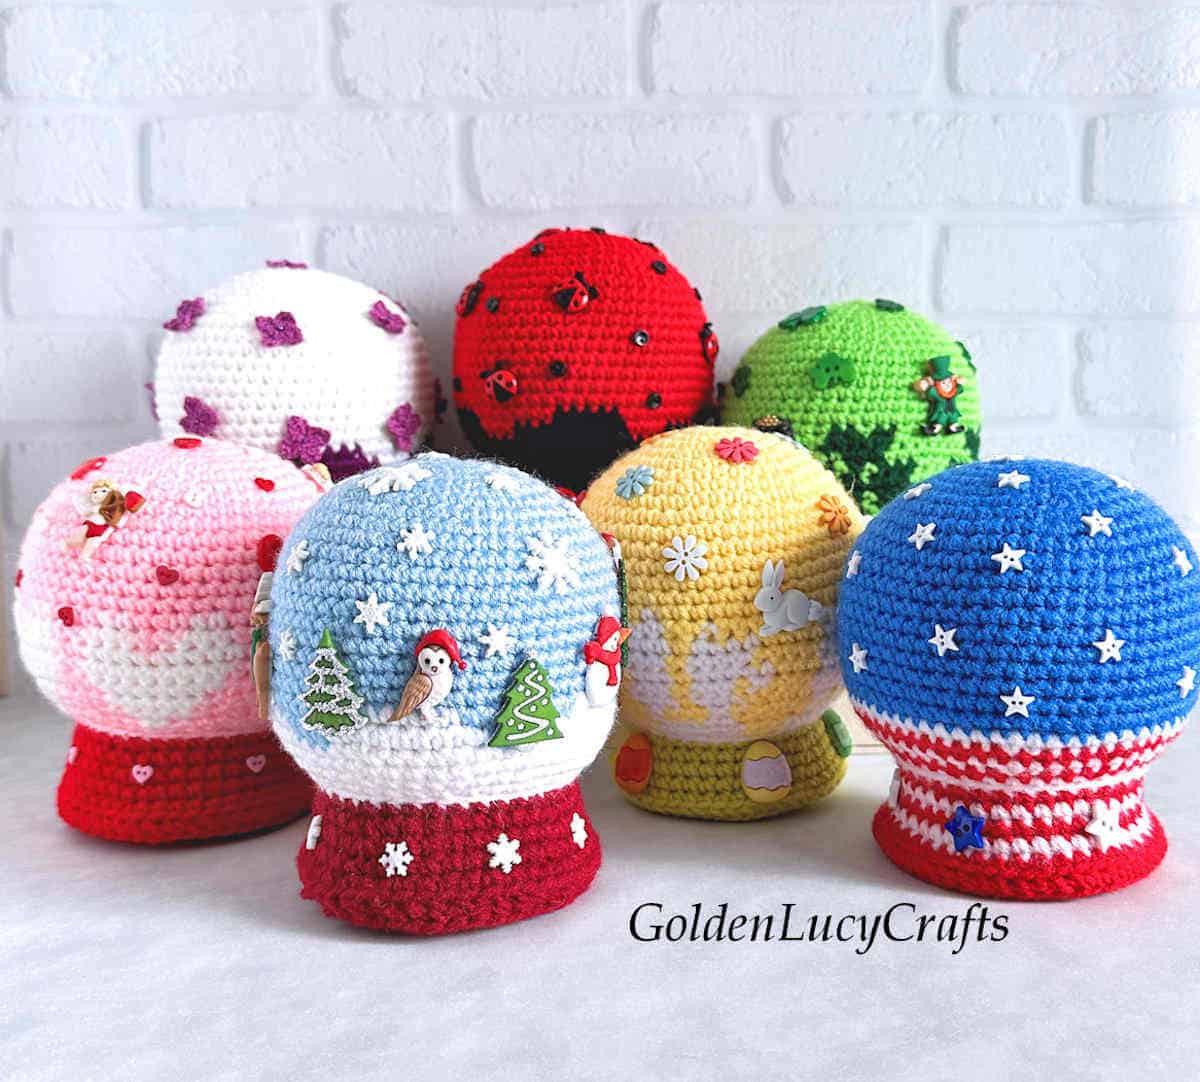 Seven crocheted snow globes amigurumi.